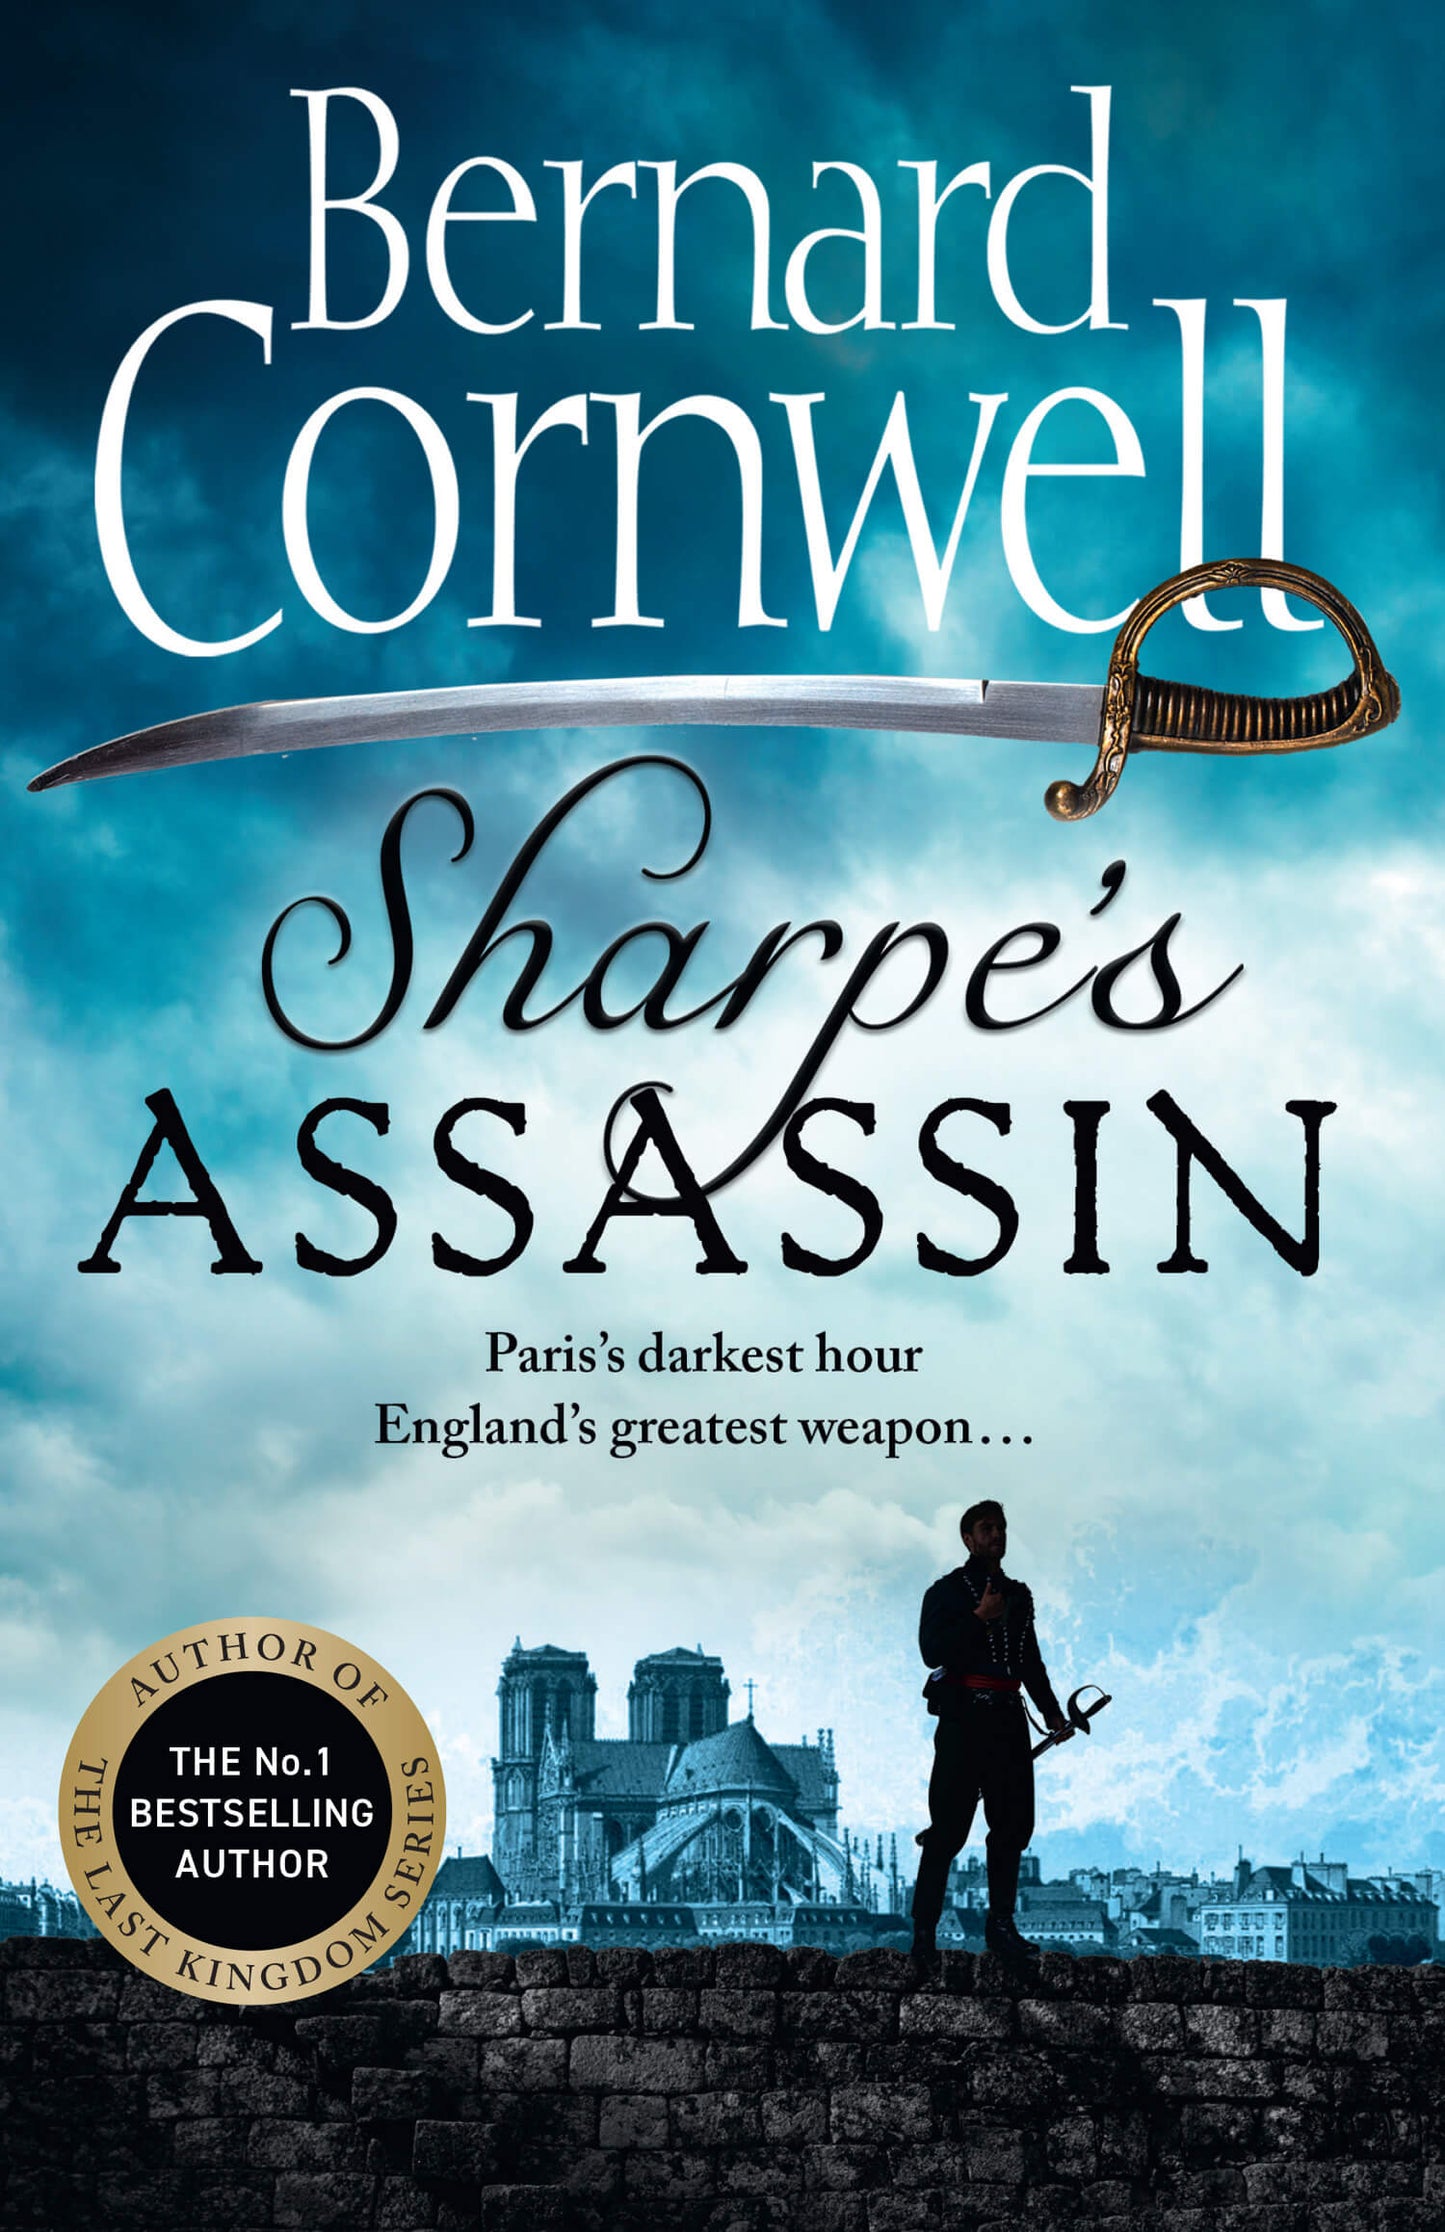 Sharpe's Assassin Bernard Cornwell